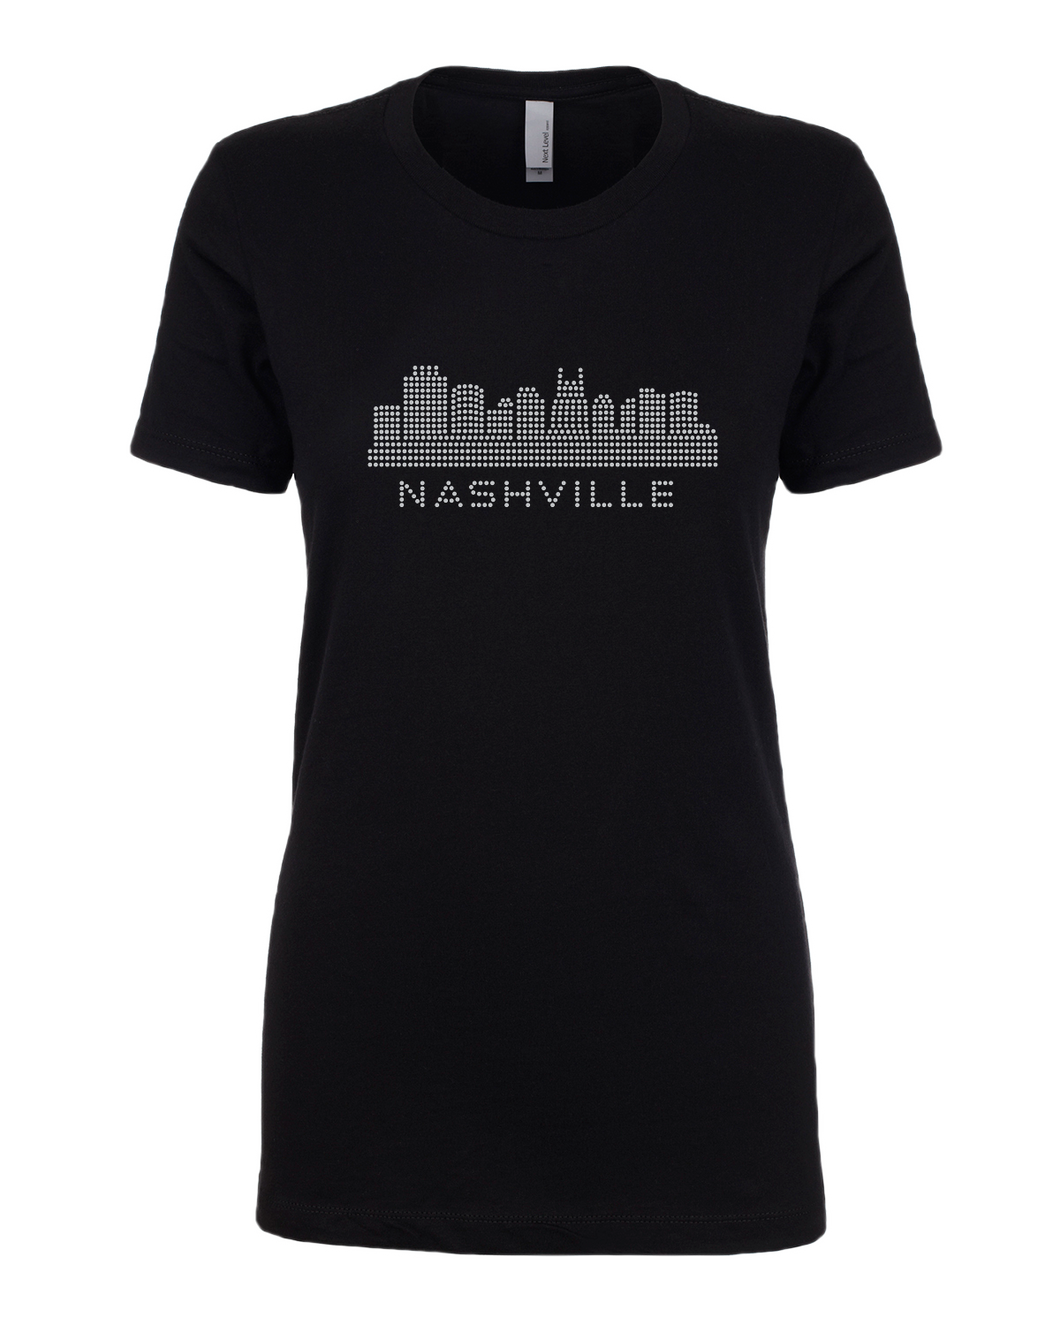 Nashville - Skyline